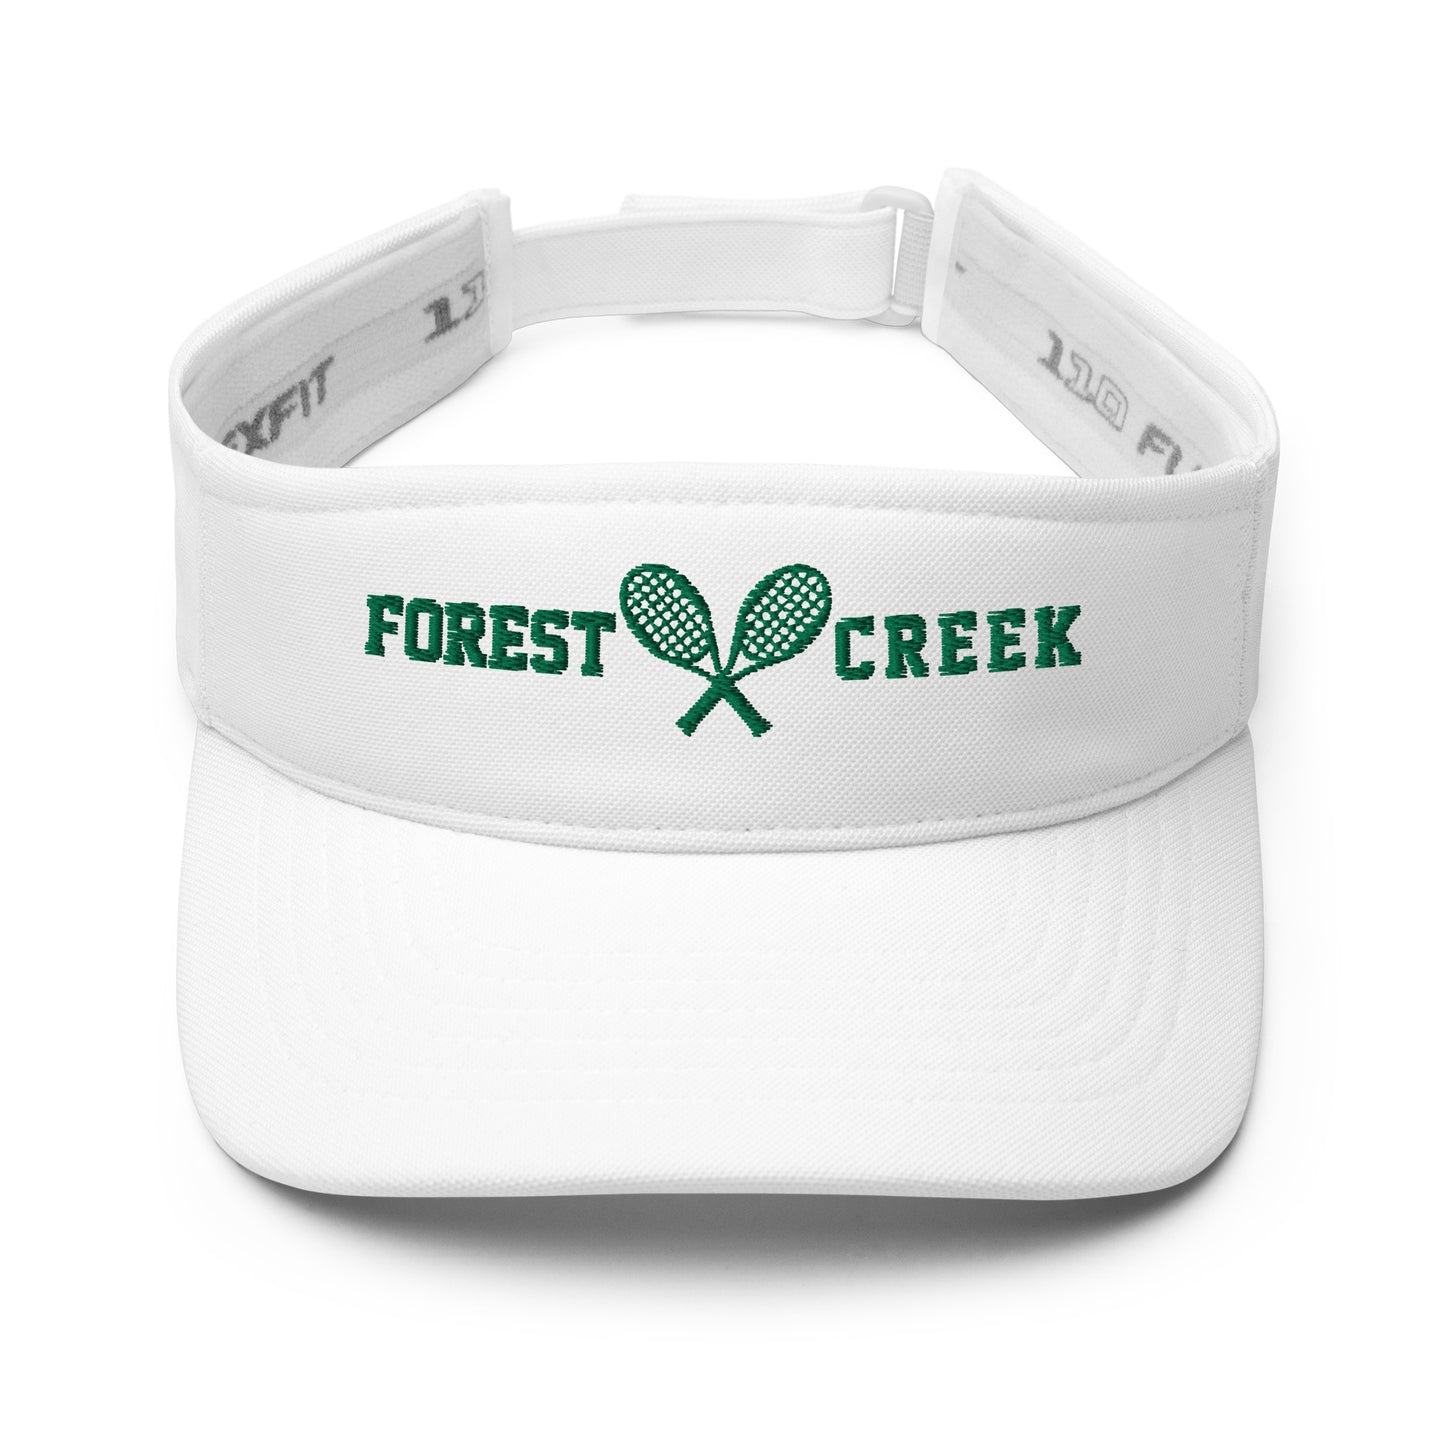 Forest Creek tennis team visor